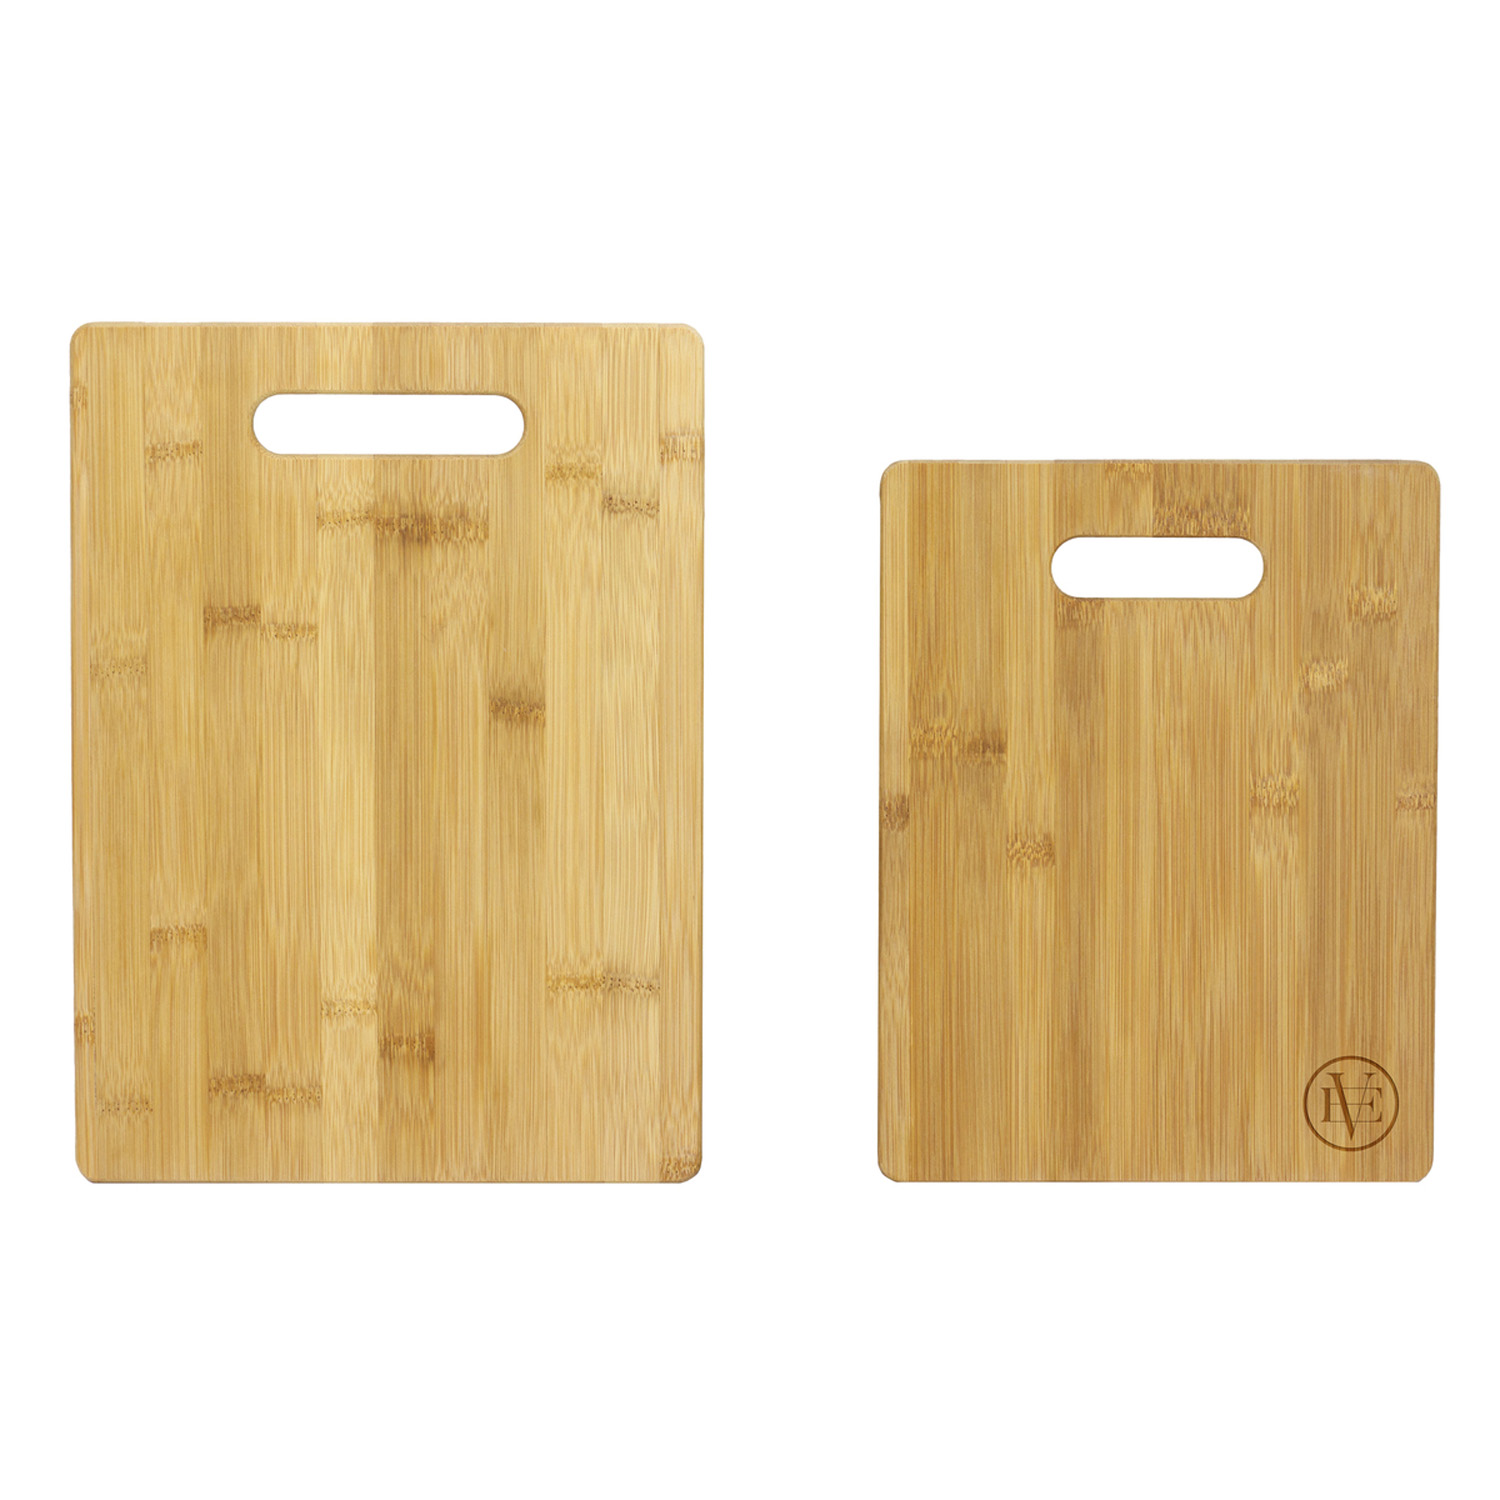 Two Piece Bamboo Cutting Board Set | 9x13 & 8x11